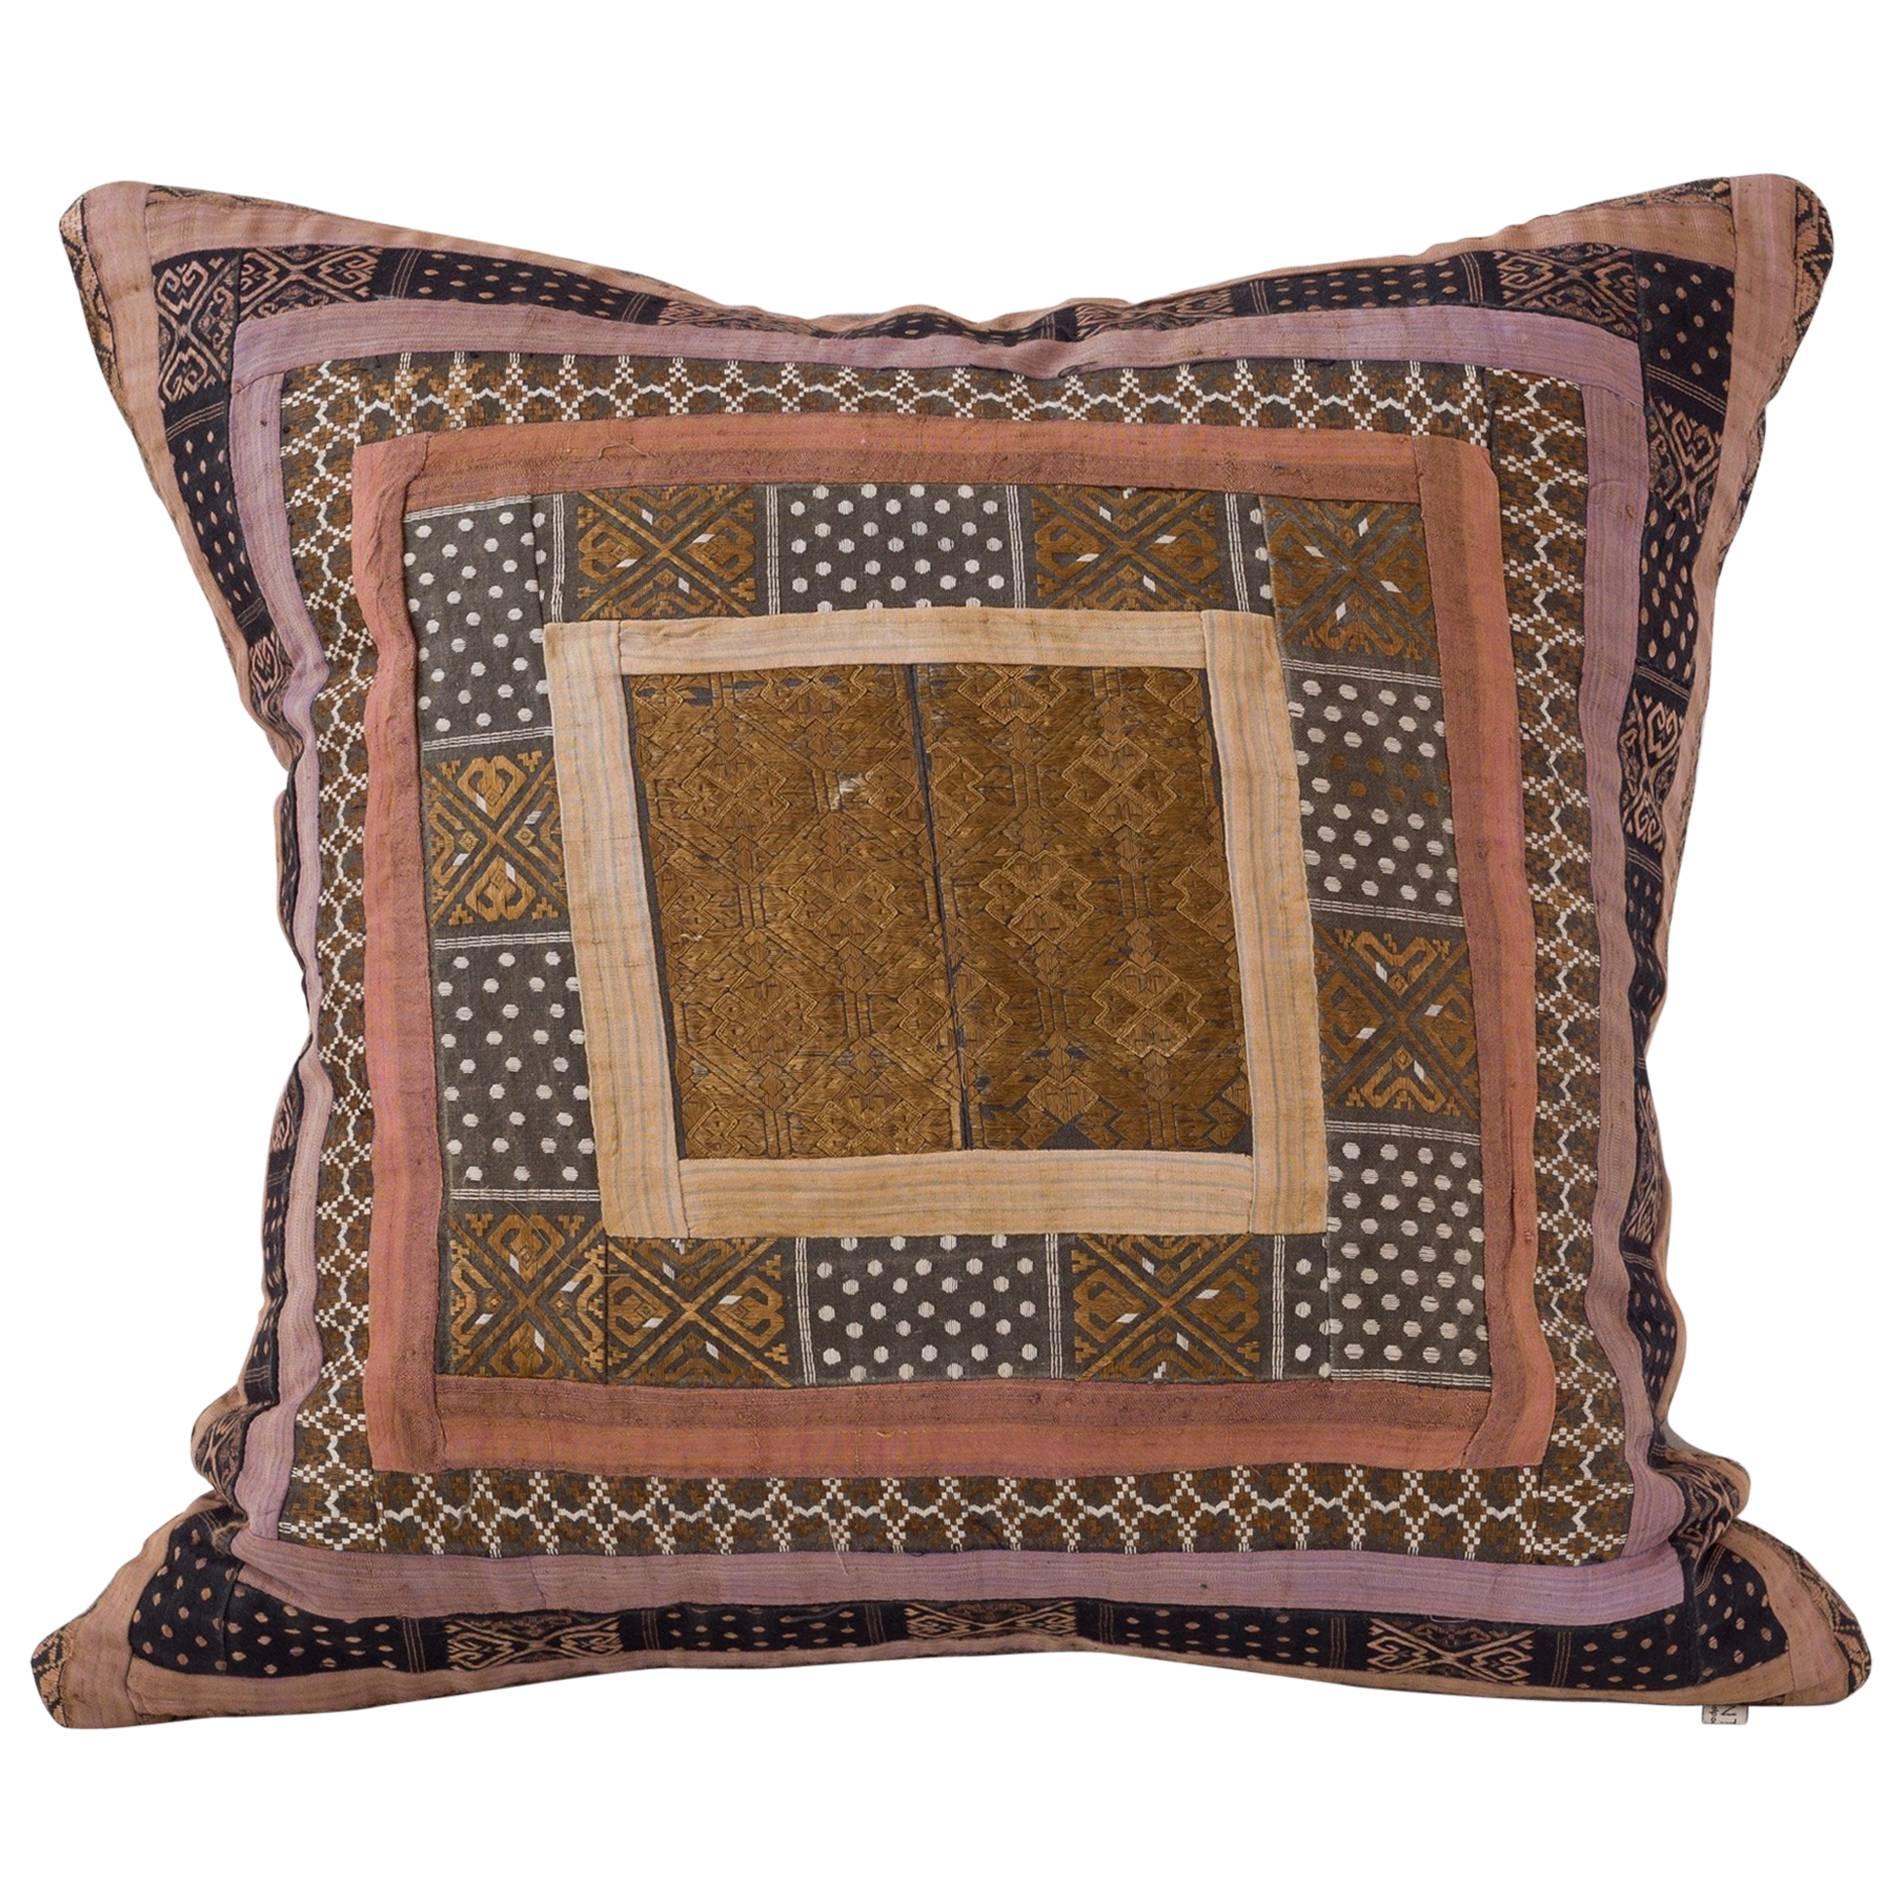 Concentric Square Embroidery Pillow, Bronze Gold Mauve Black For Sale